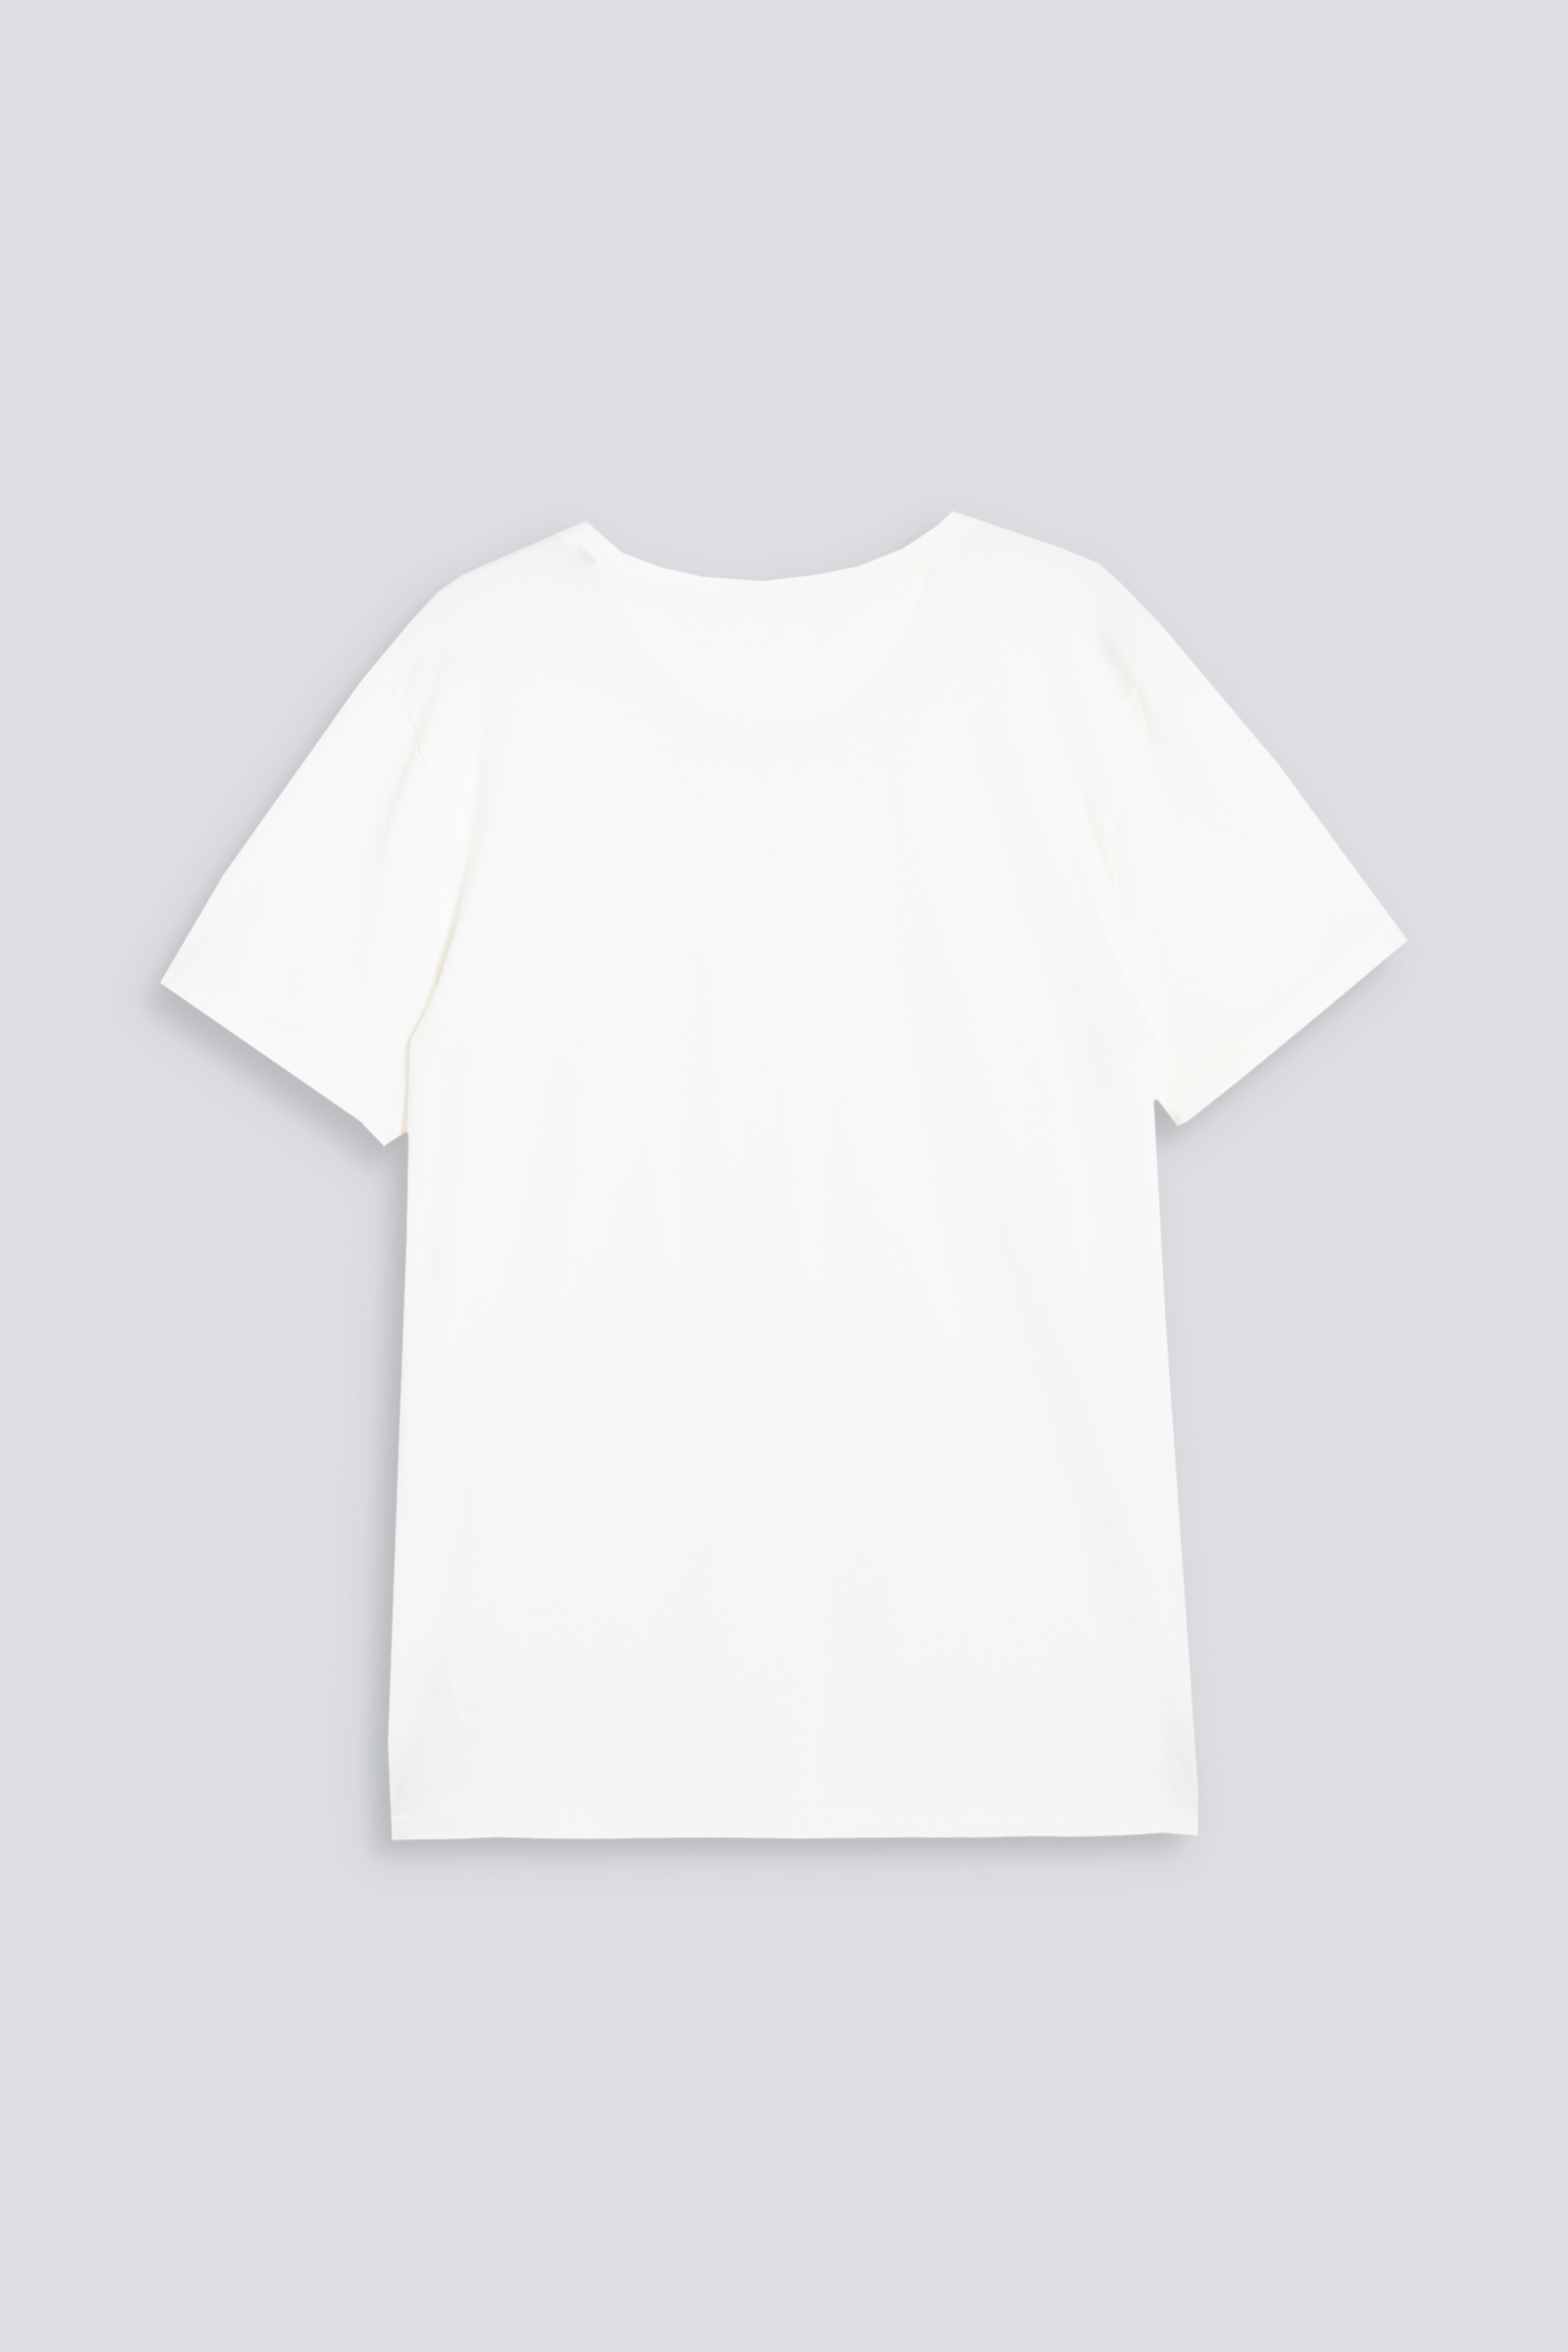 V-neck T-shirt Whisper White Serie Magila Singola Rear View | mey®